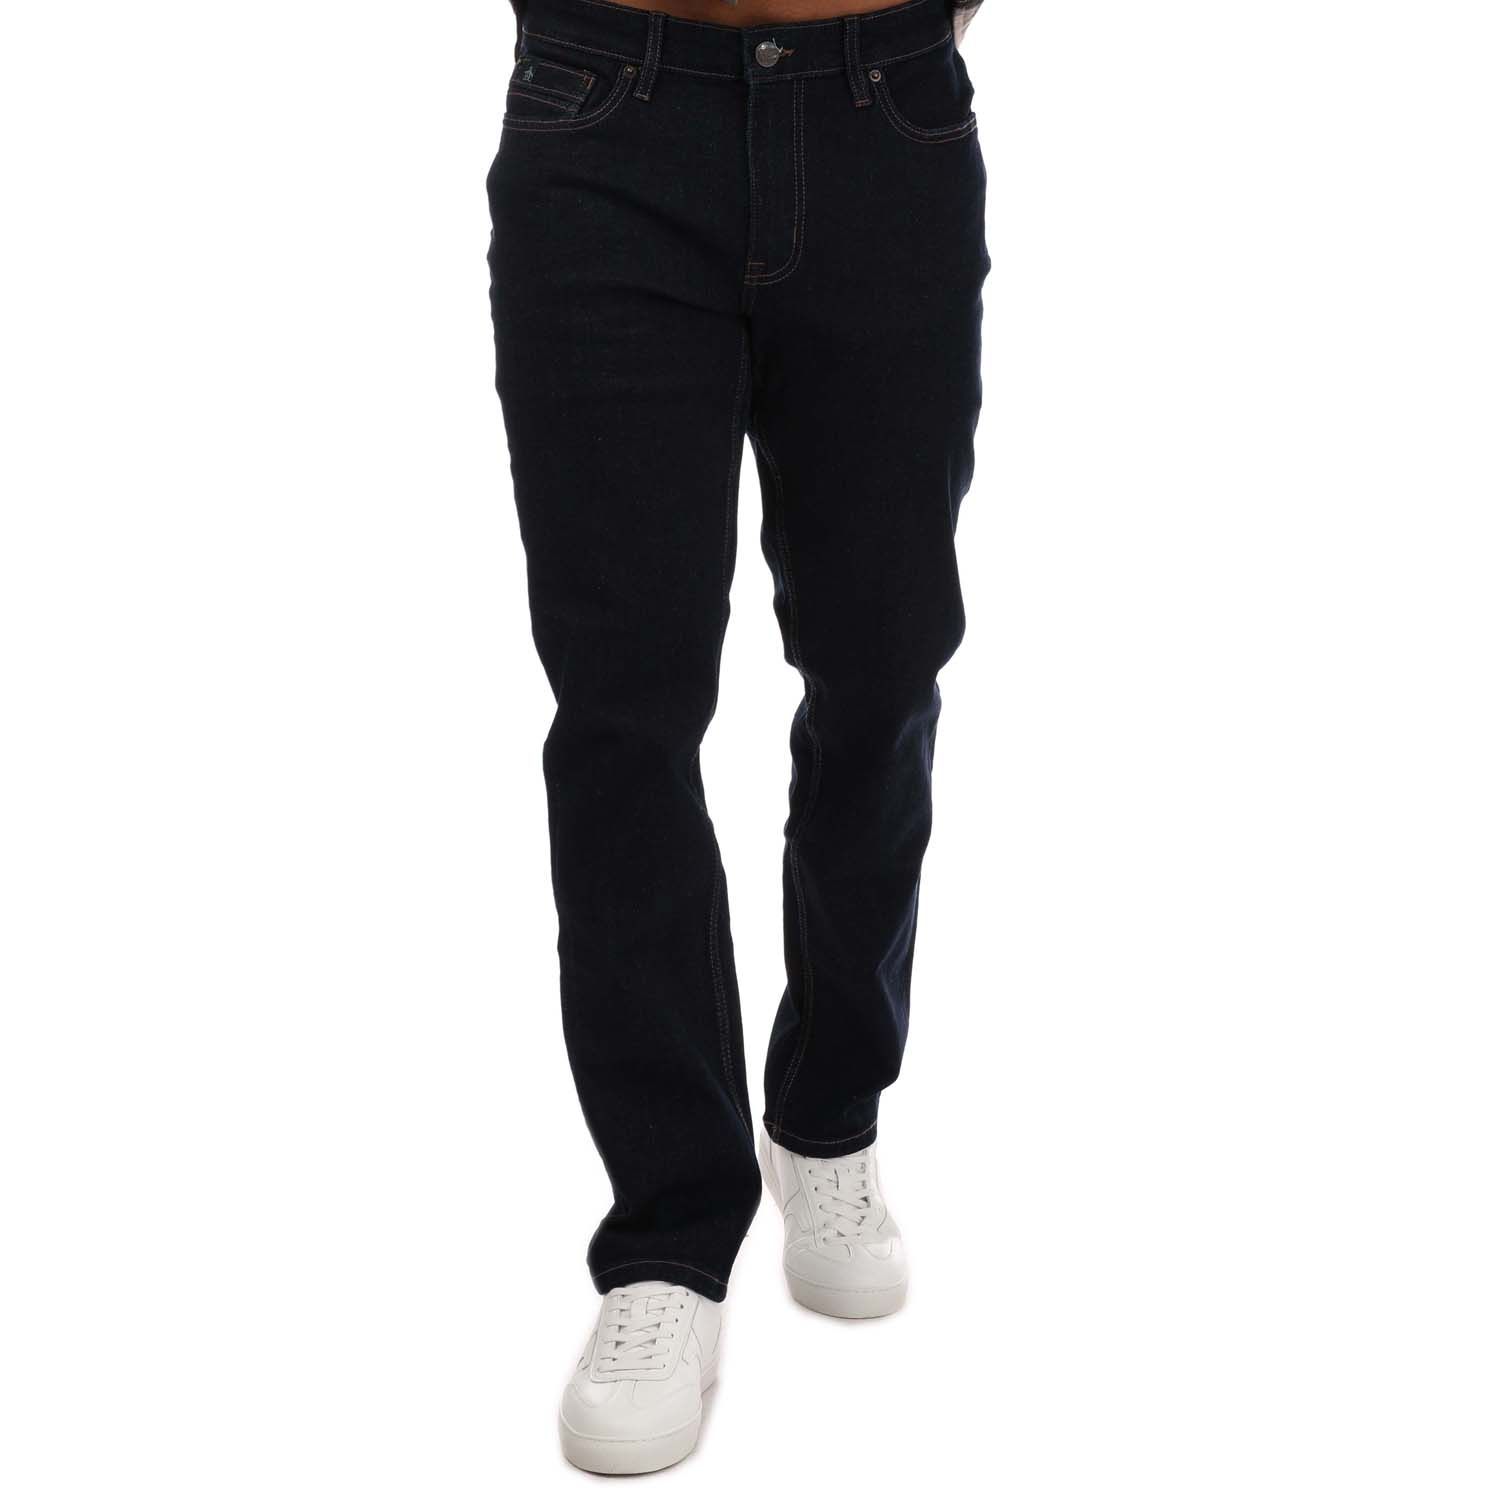 Indigo Original Penguin Mens Slim Fit Stretch Jeans - Get The Label